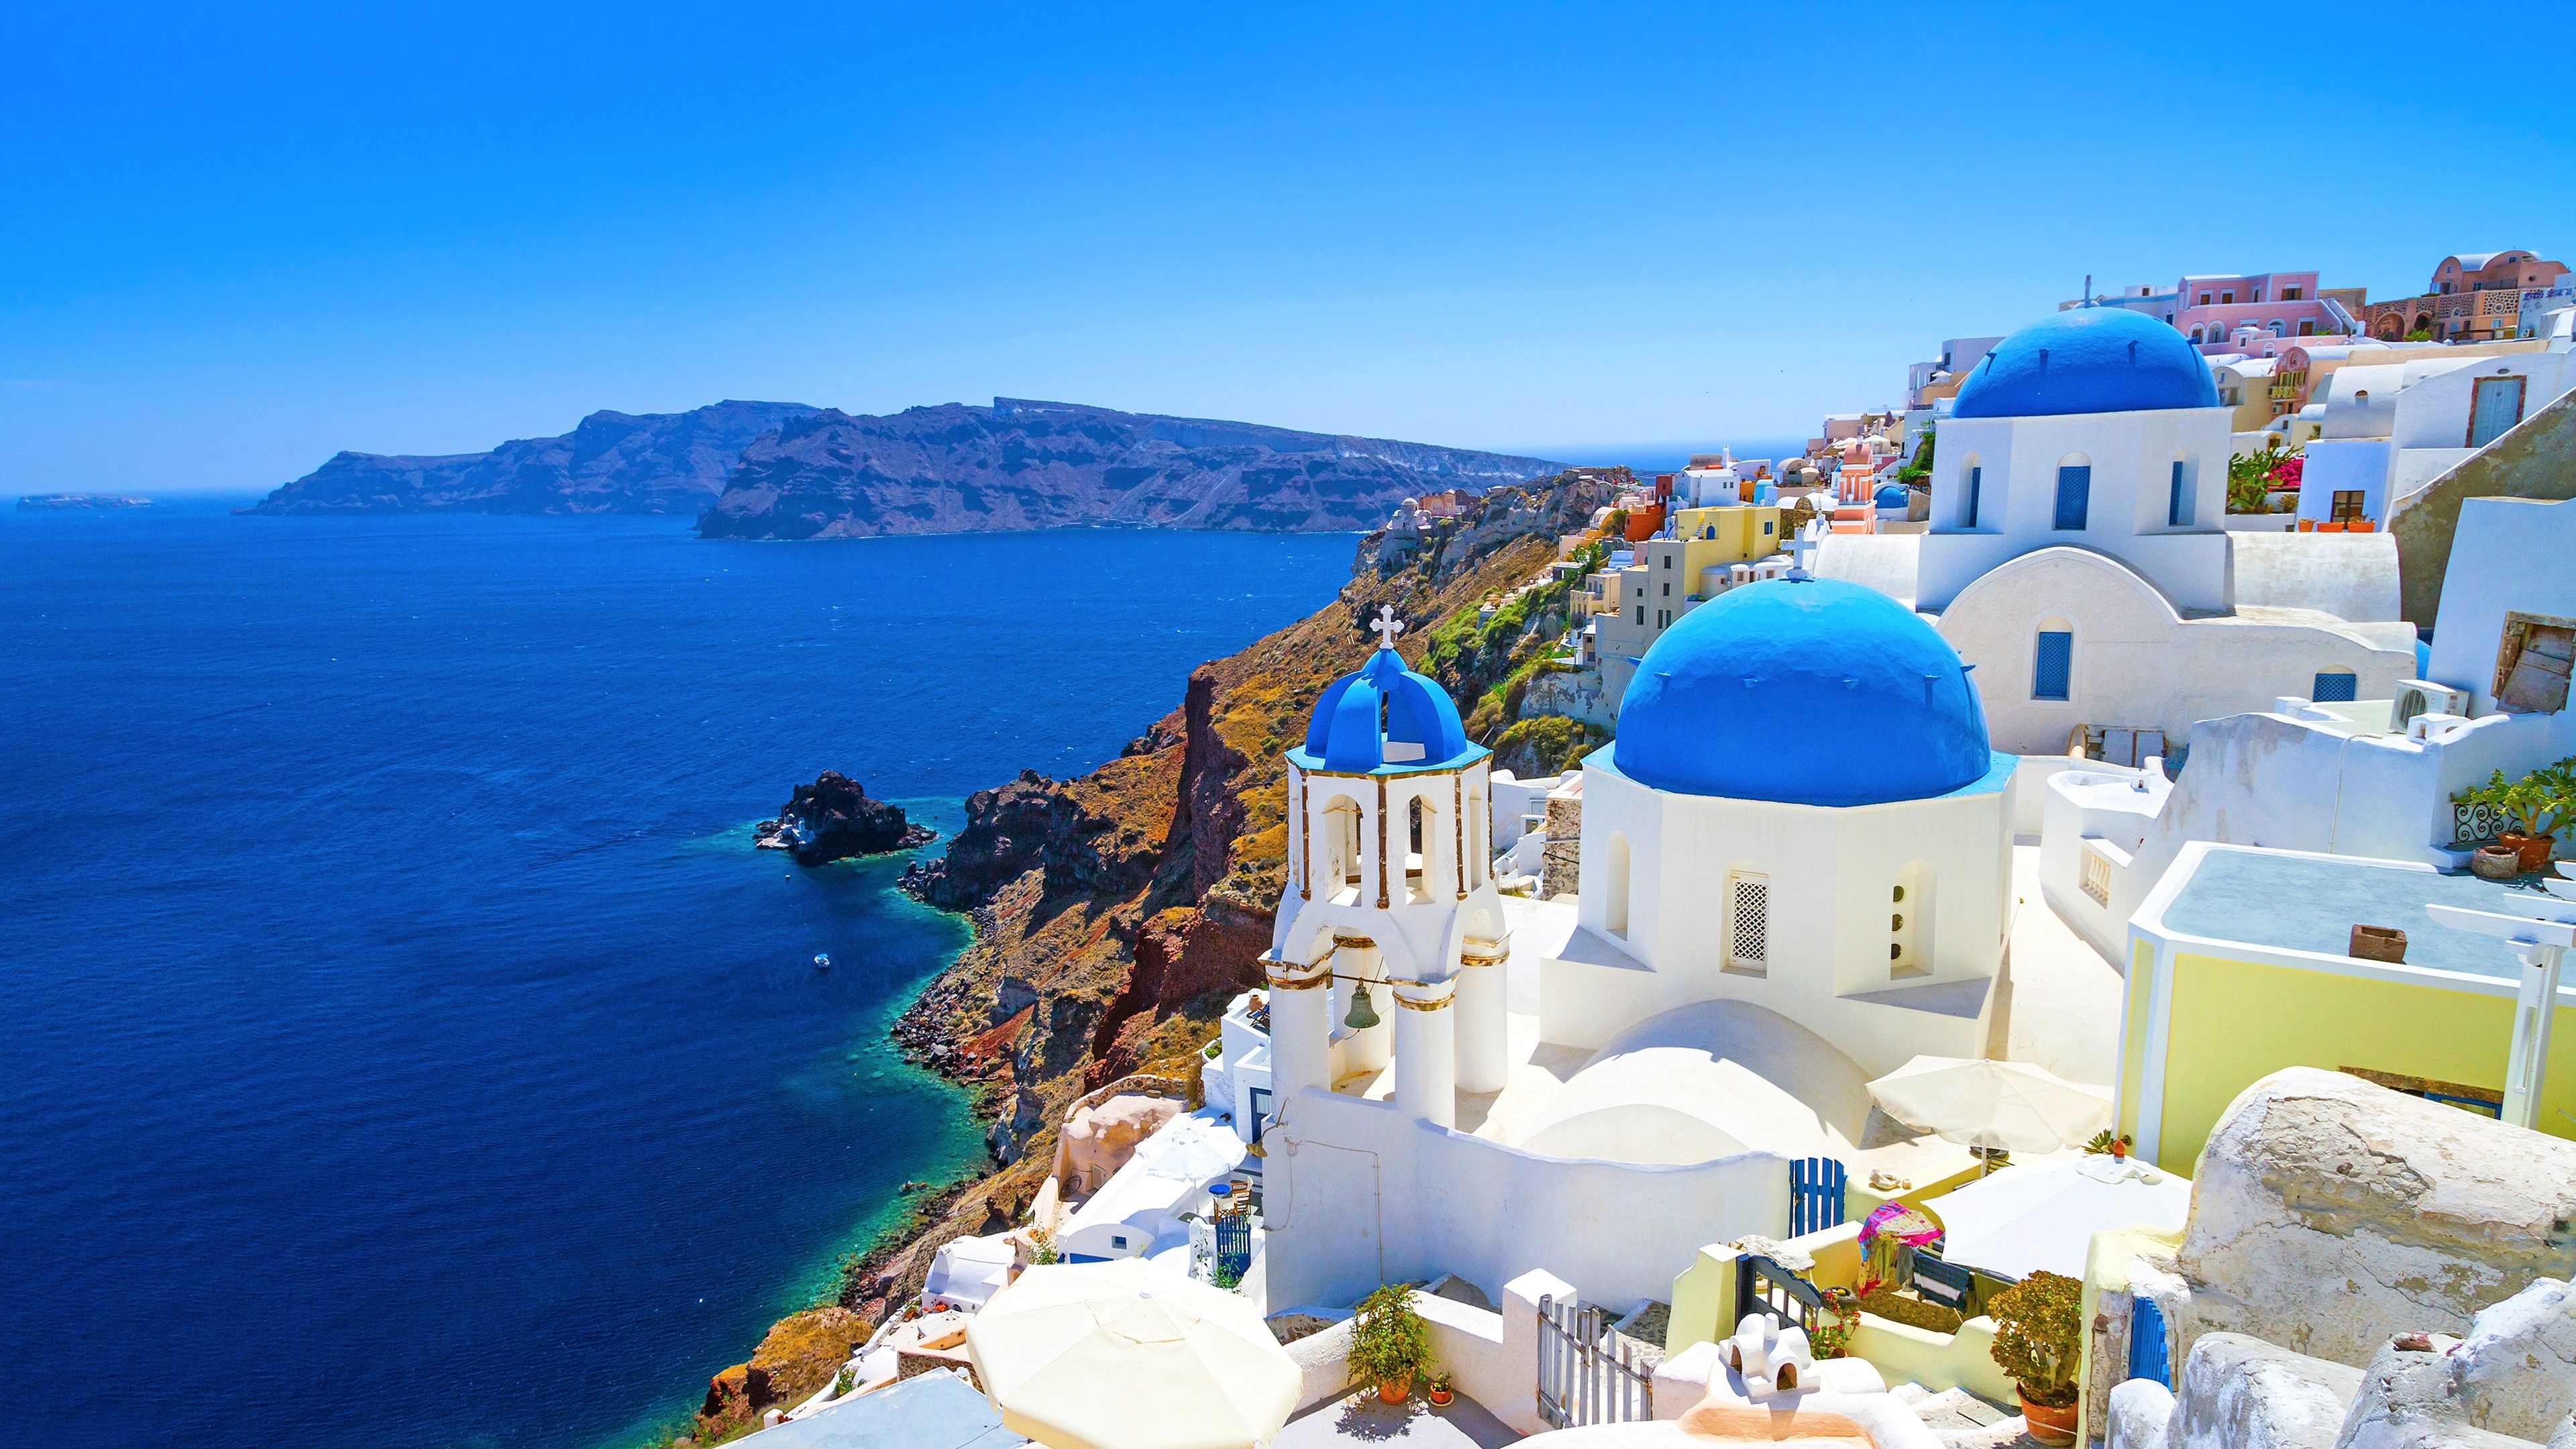 Free download Greece 4K Wallpapers Top Greece 4K Backgrounds